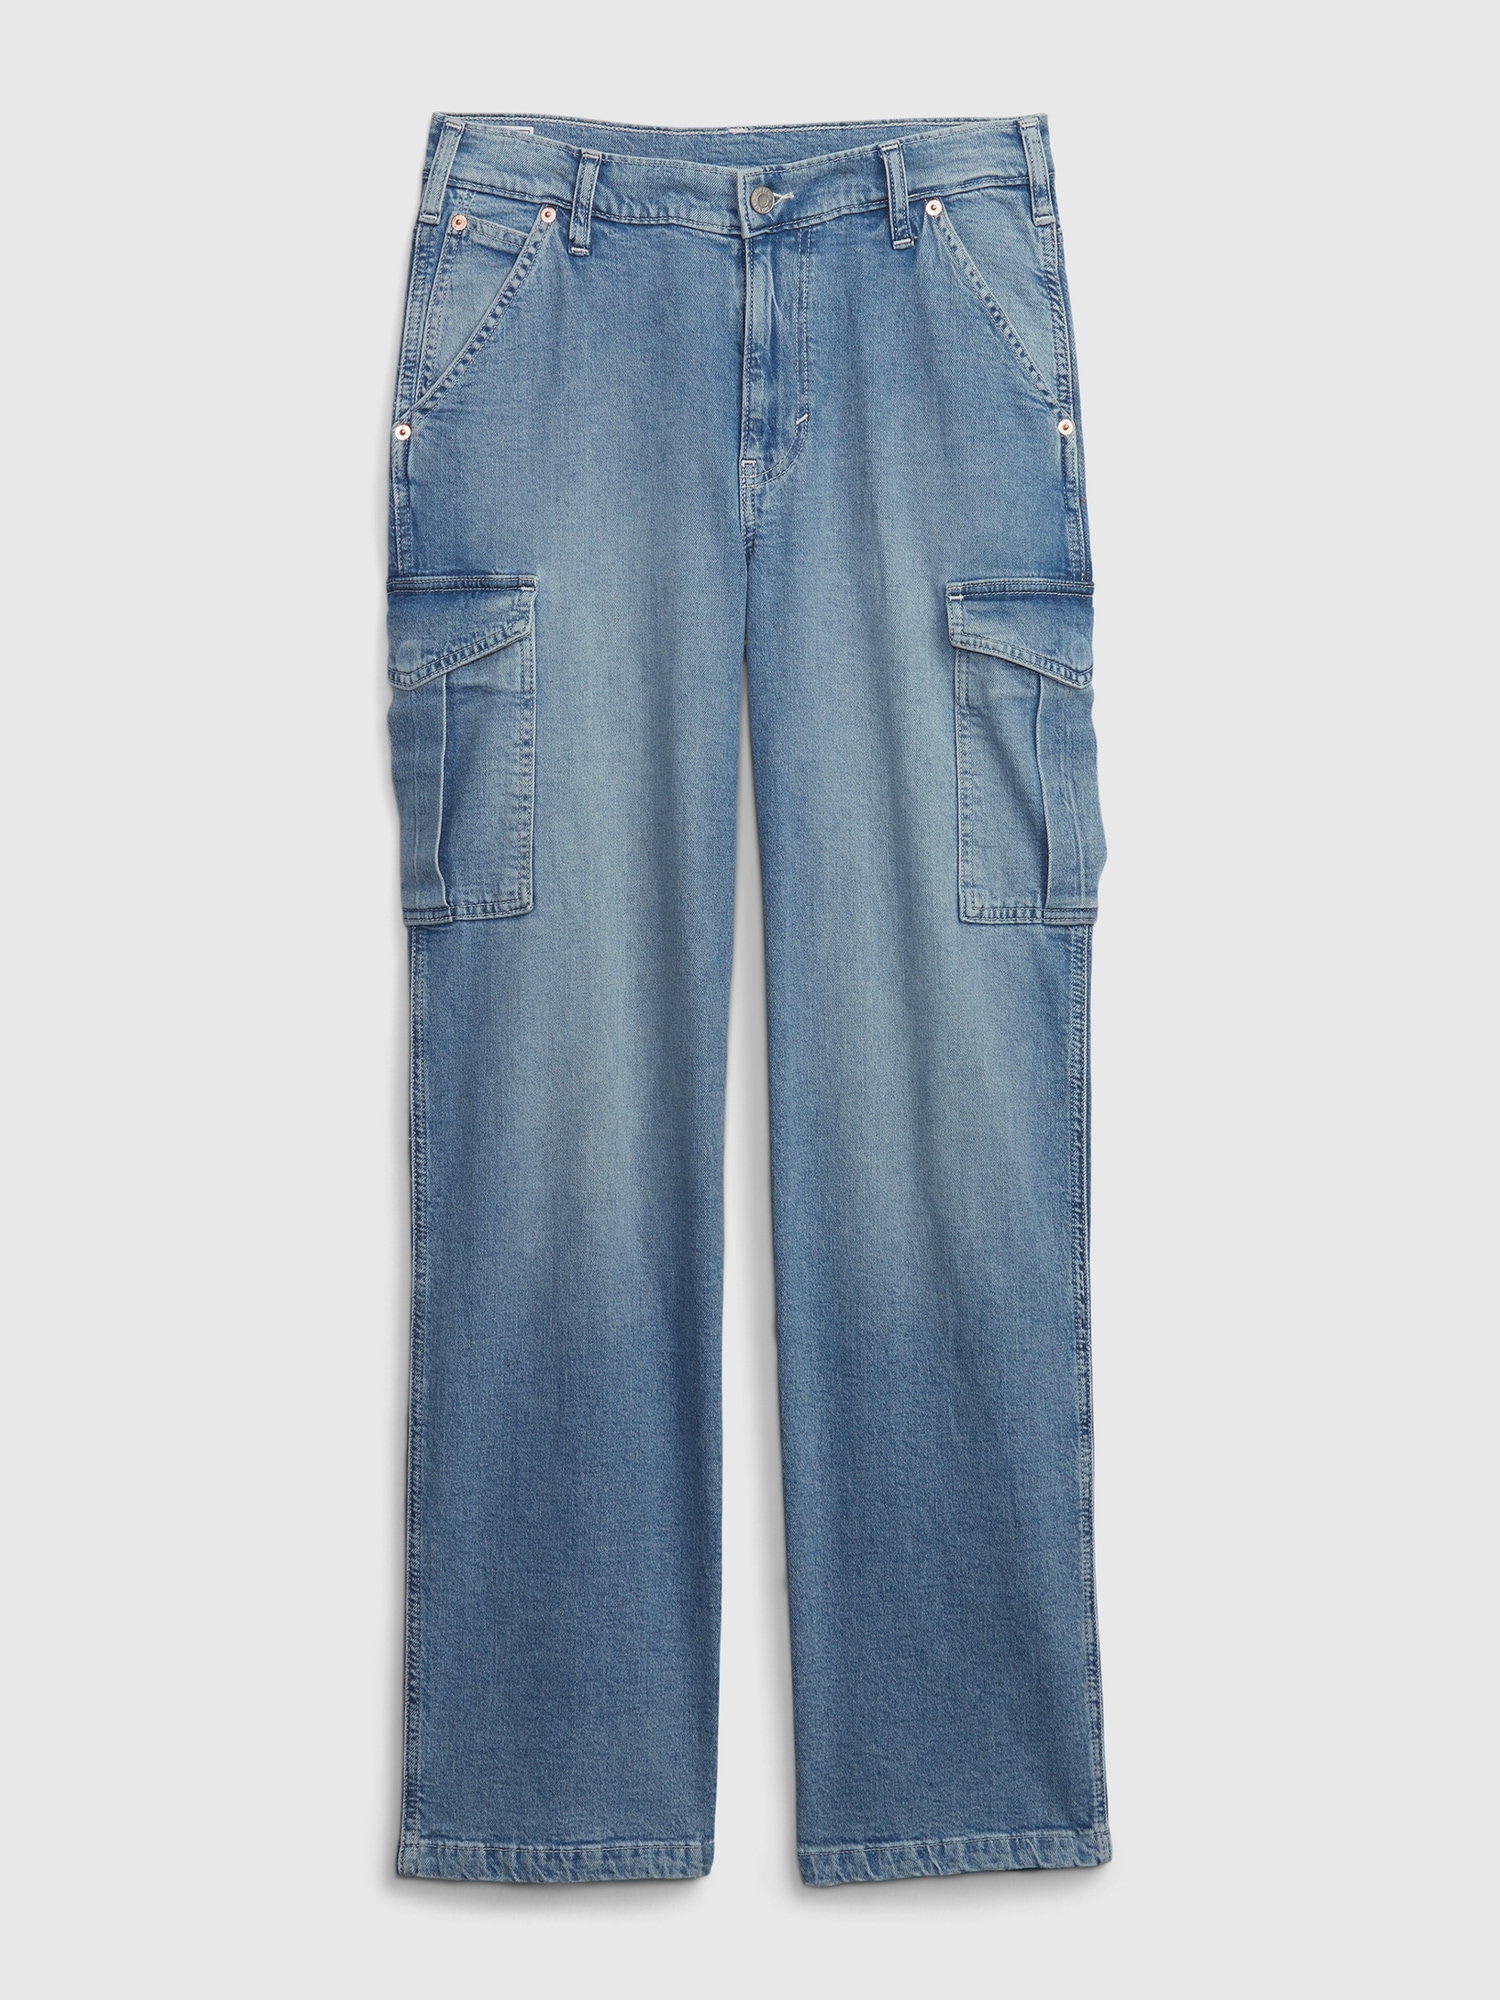 White Lexie Side Pocket Cargo Pants material: soft denim color: white size  S,M,L,XL(in cm): waist 66-72, hips 82-86, length 94 Black Le... | Instagram